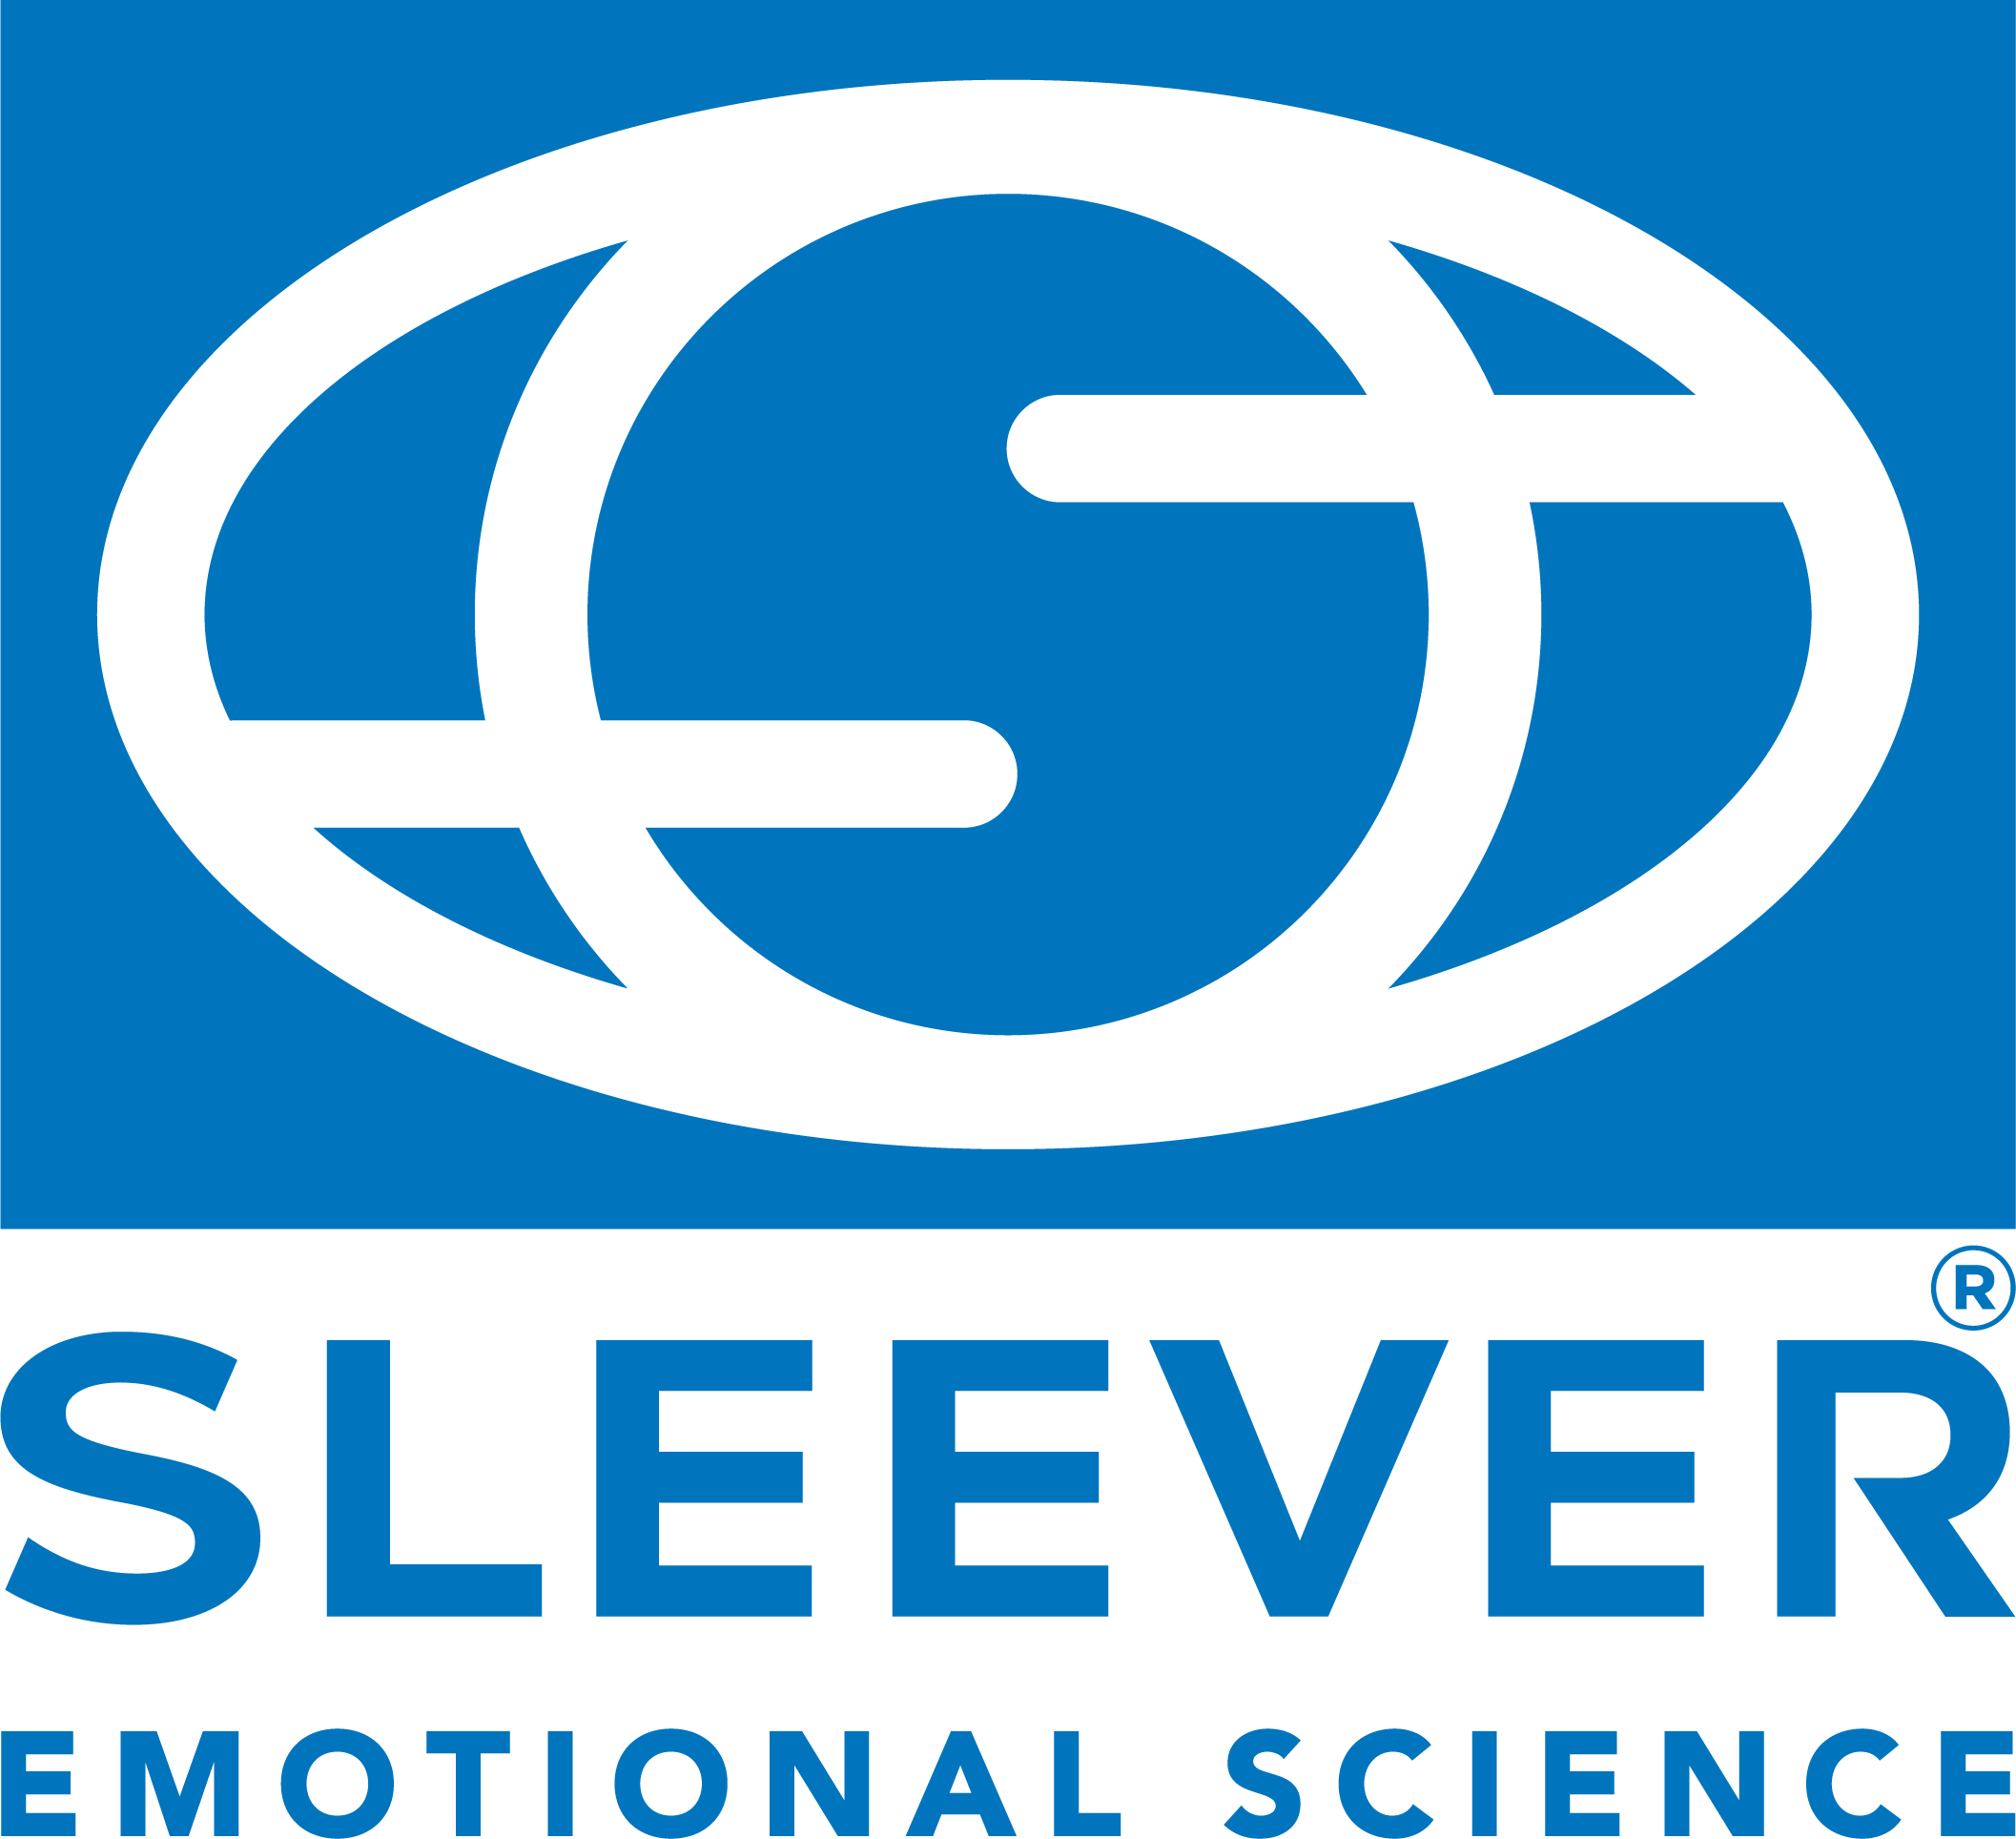 Sleever International